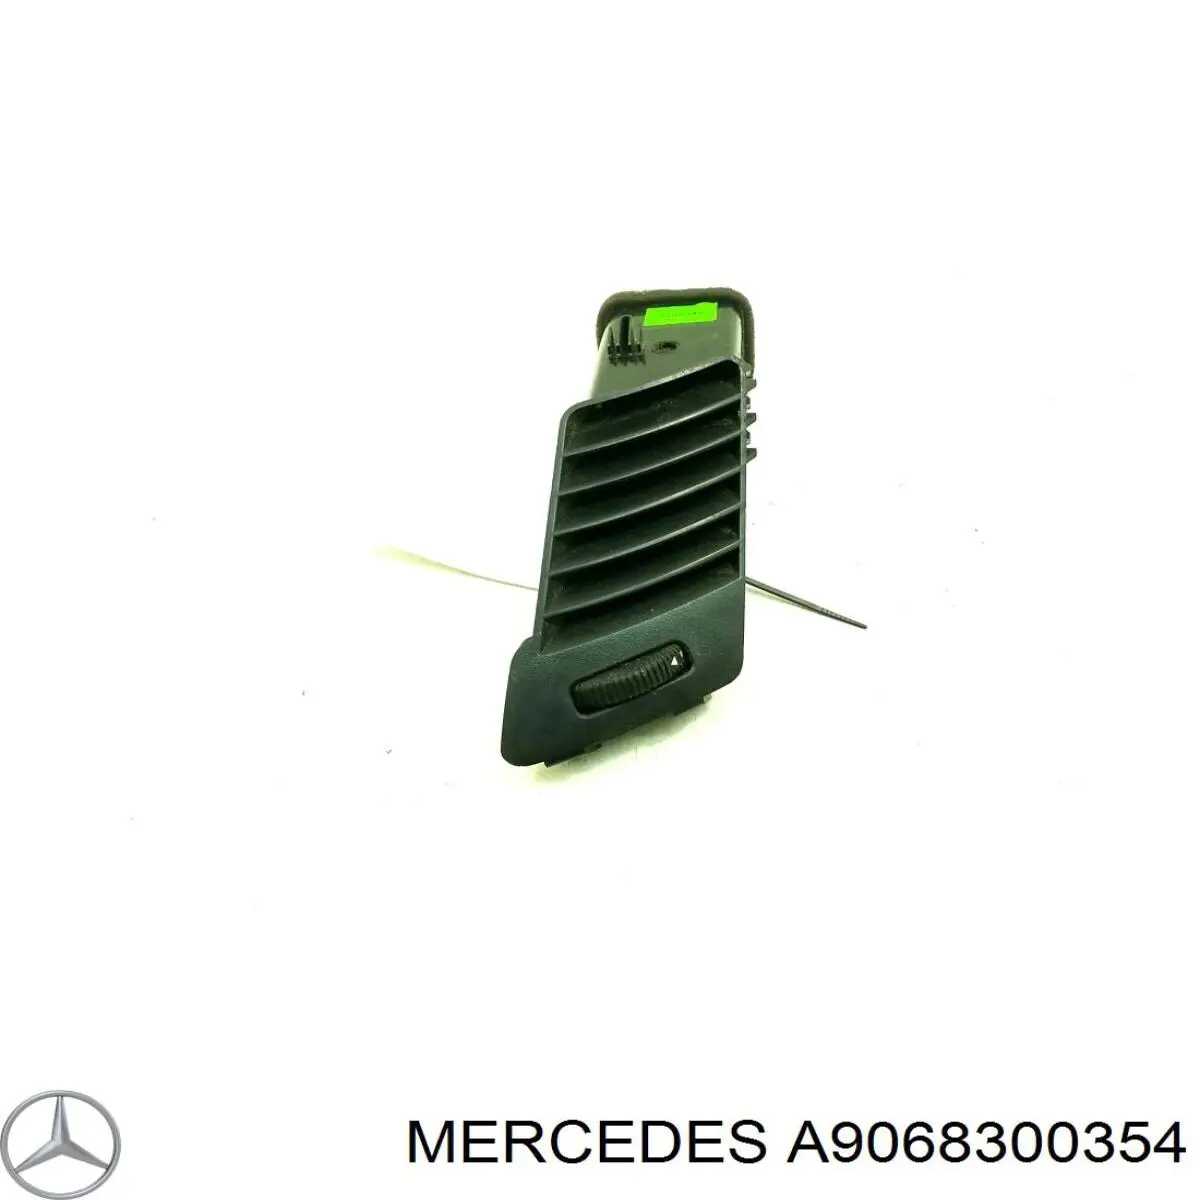 A9068300354 Mercedes rejilla aireadora de salpicadero derecha